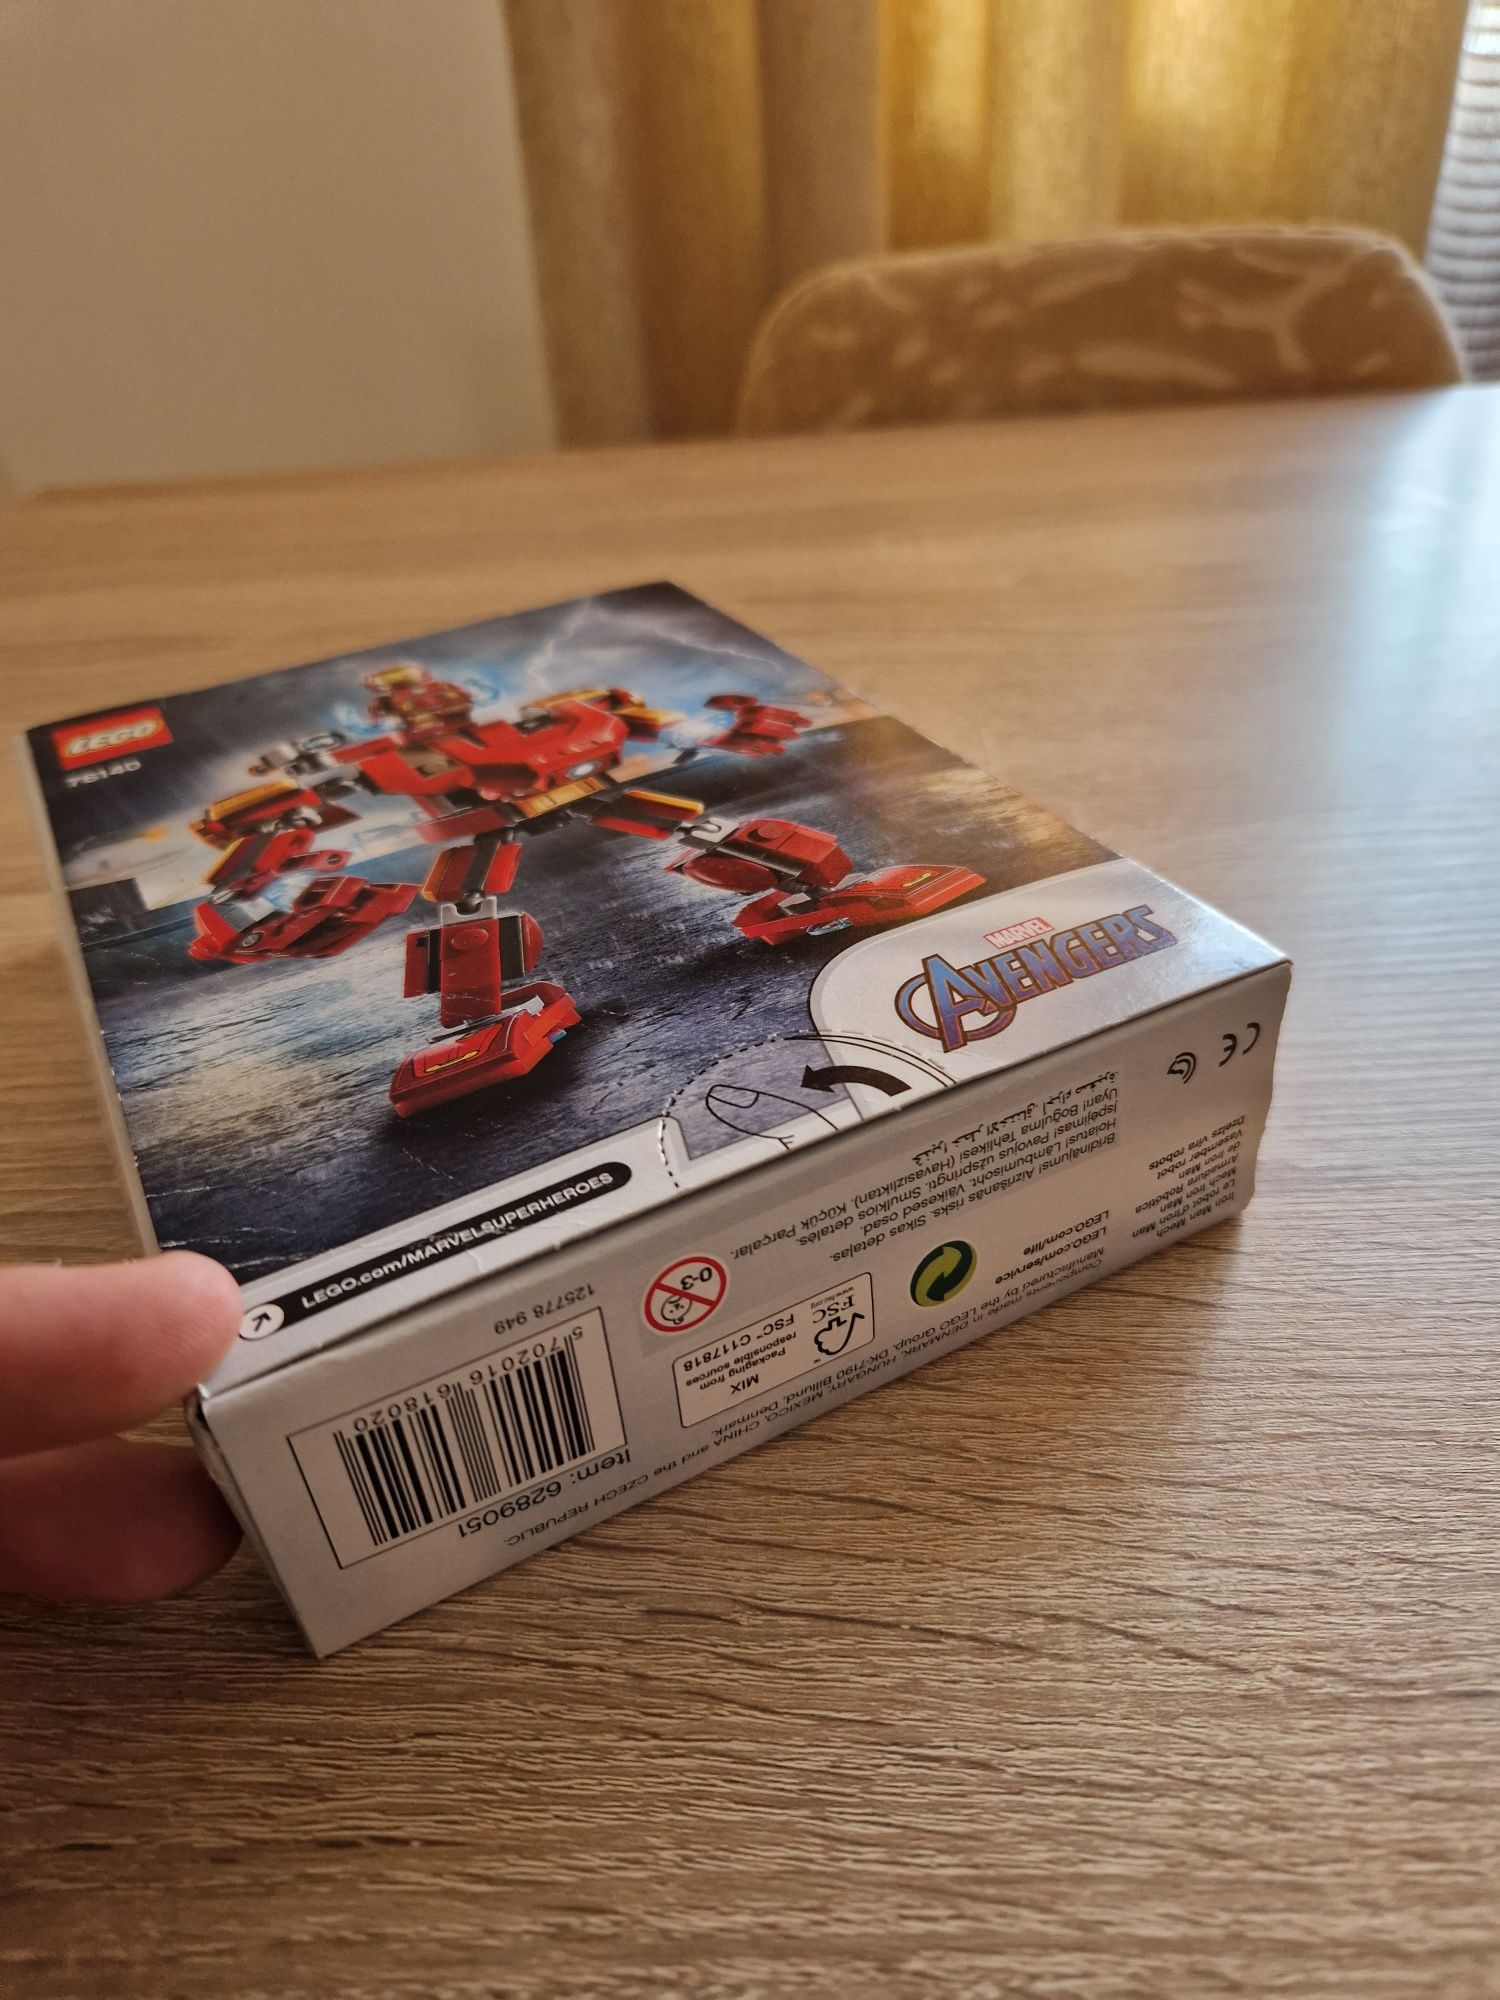 Lego Set 76140 Marvel Avengers Iron Man- Novo e Selad